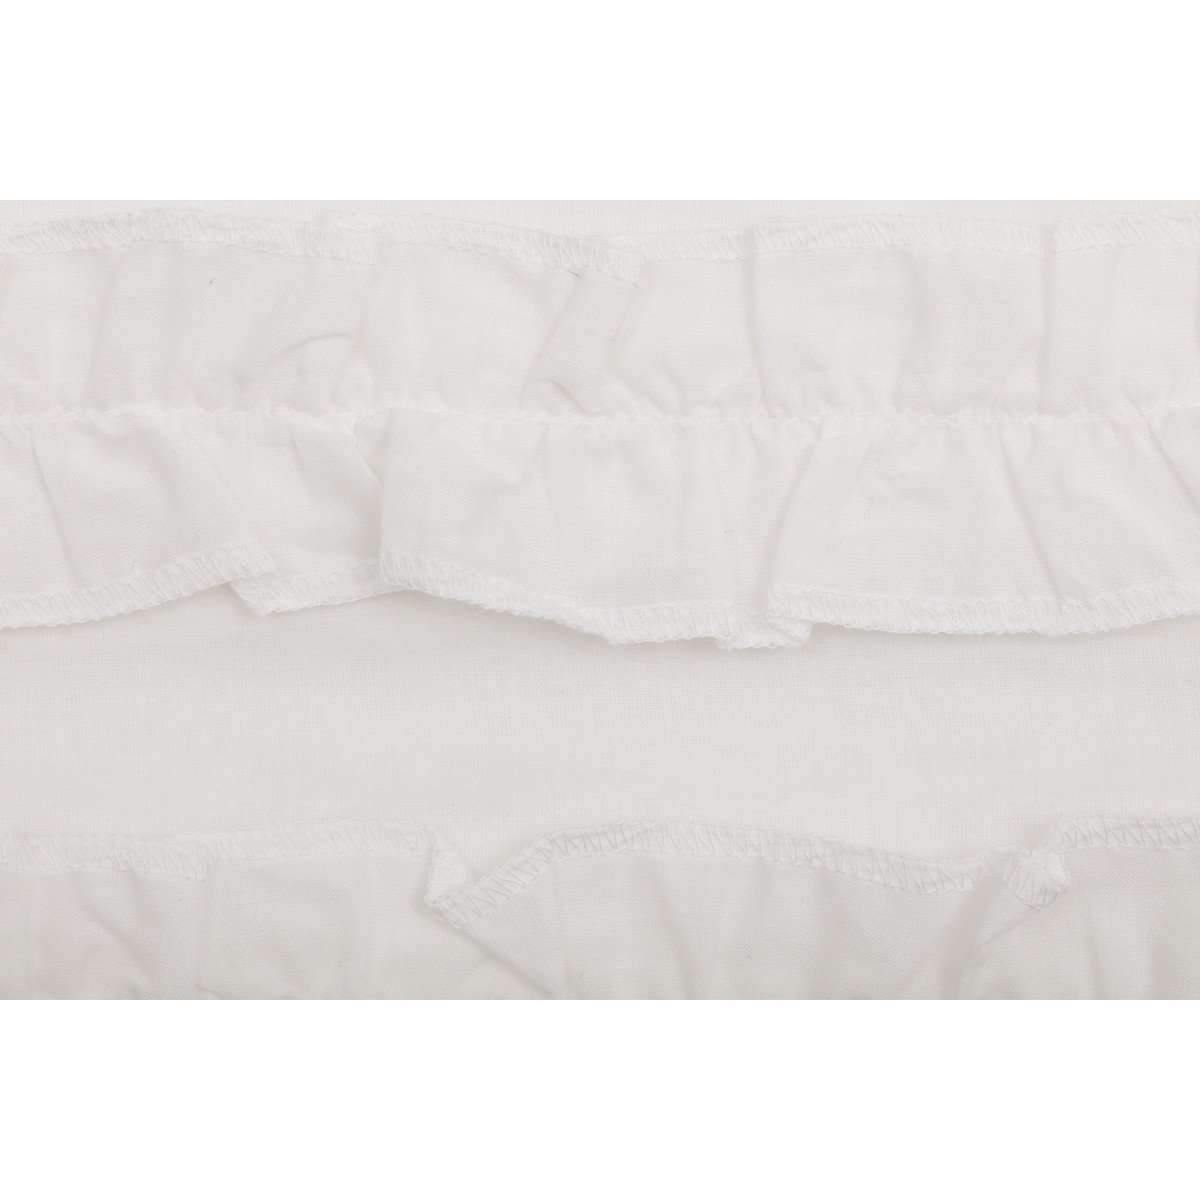 White Ruffled Sheer Petticoat Prairie Long Panel Set of 2 - The Fox Decor